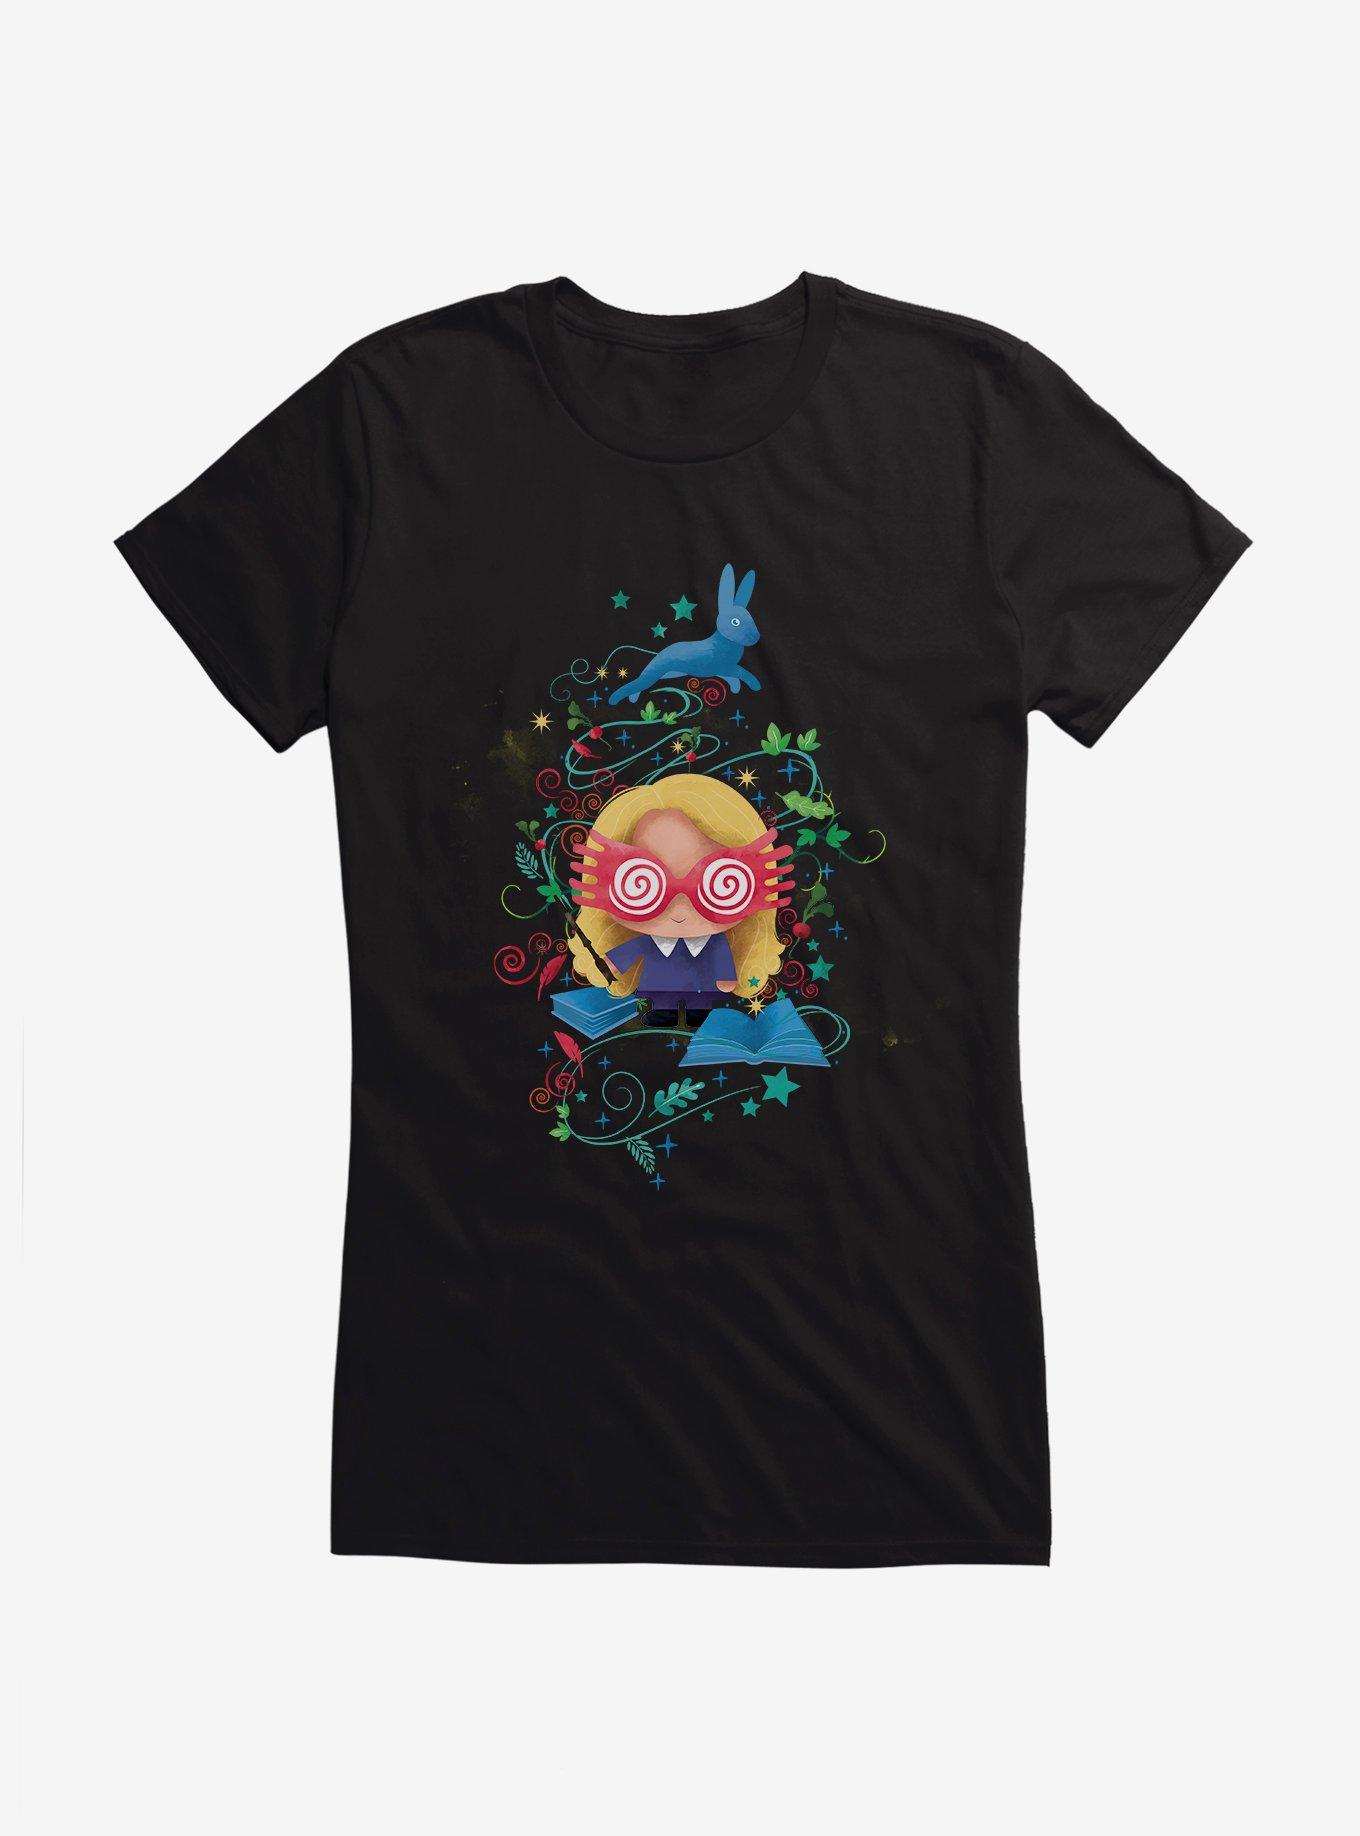 Harry Potter Luna Lovegood Graphic Girls T-Shirt